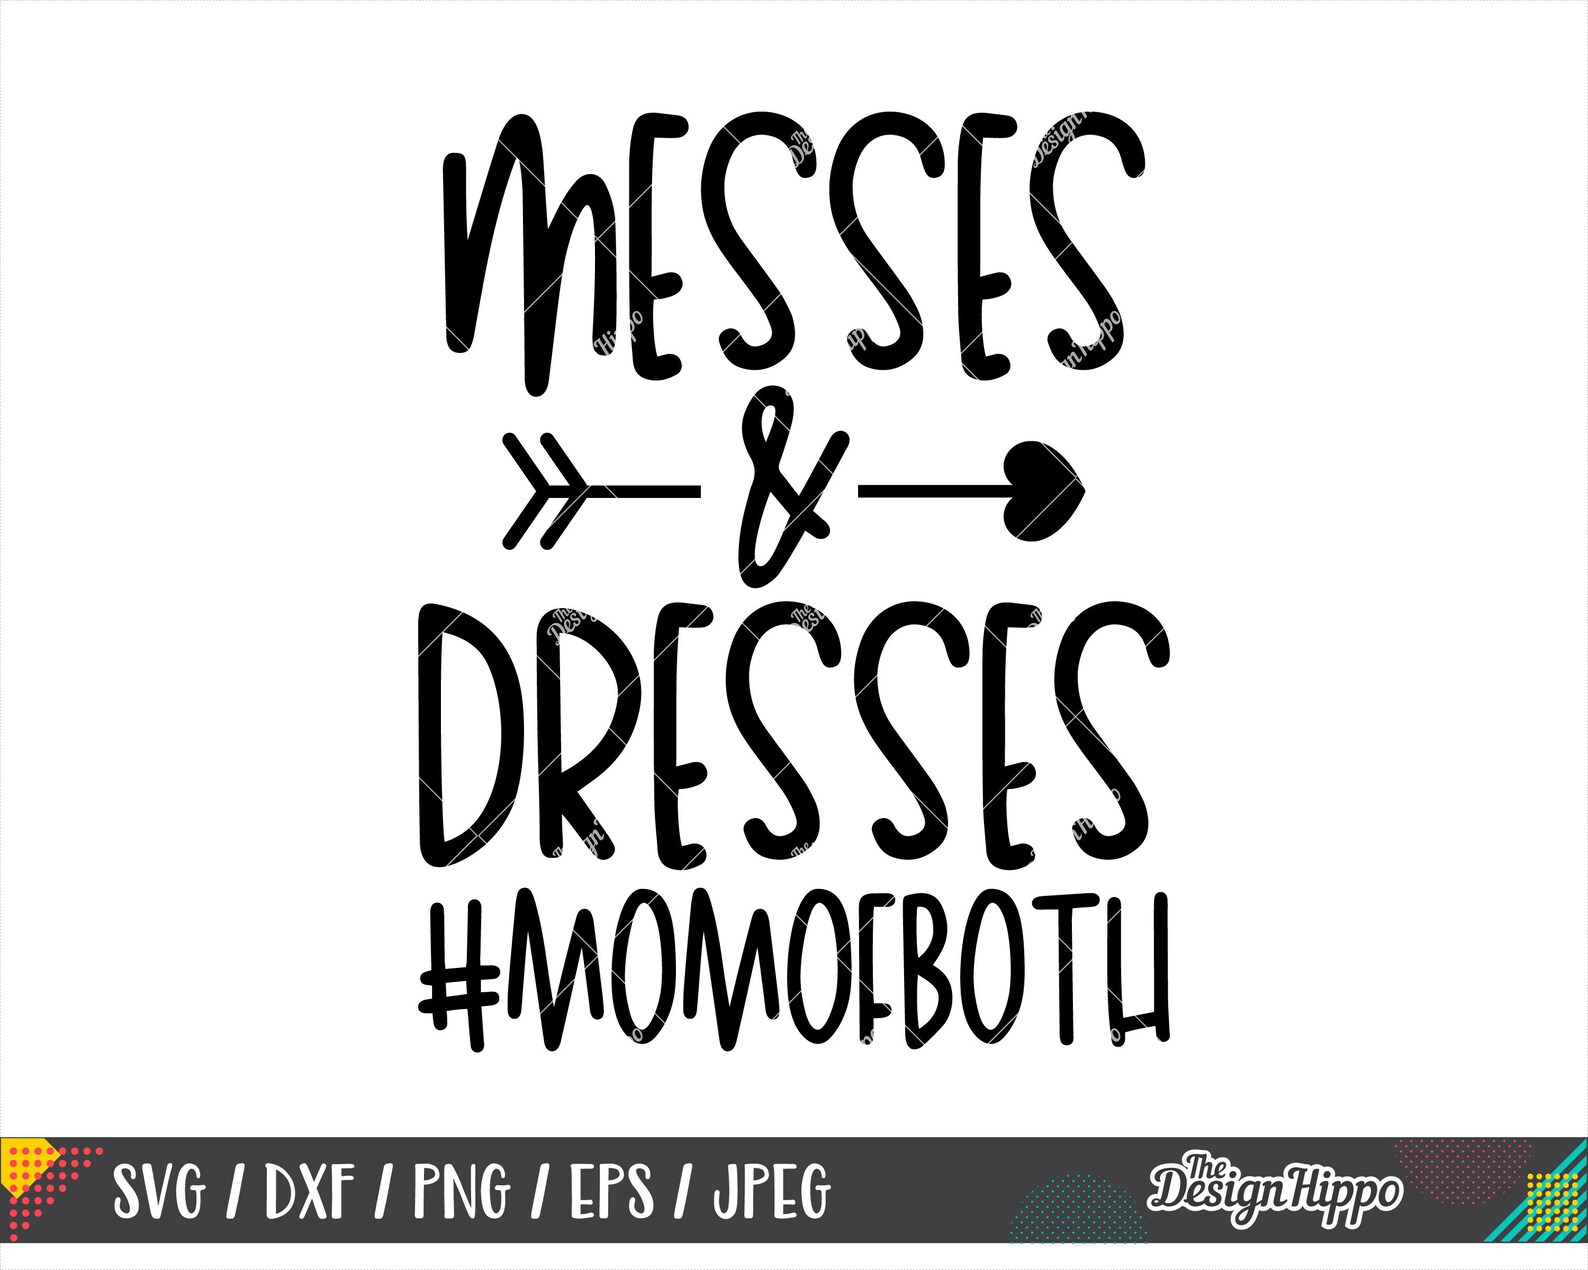 Messes and dresses svg Mom of both svg Mom life svg Mom SVG | Etsy